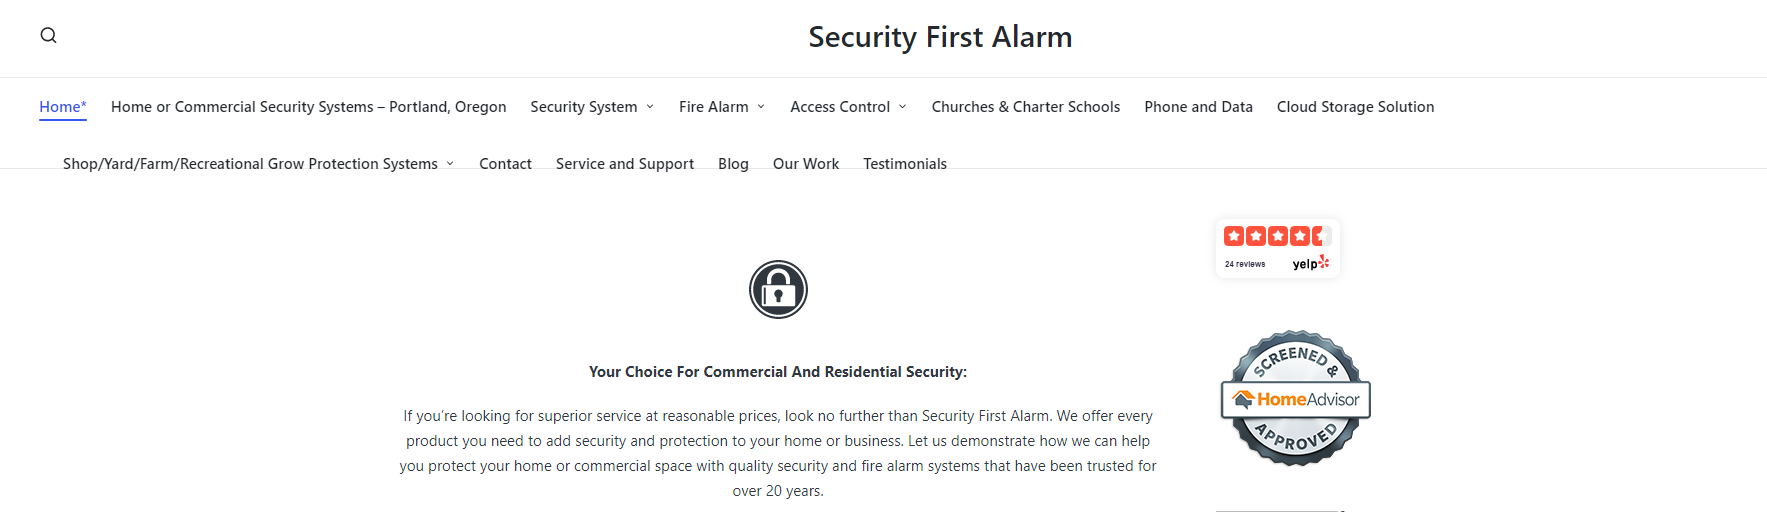 Security First Alarm LLC